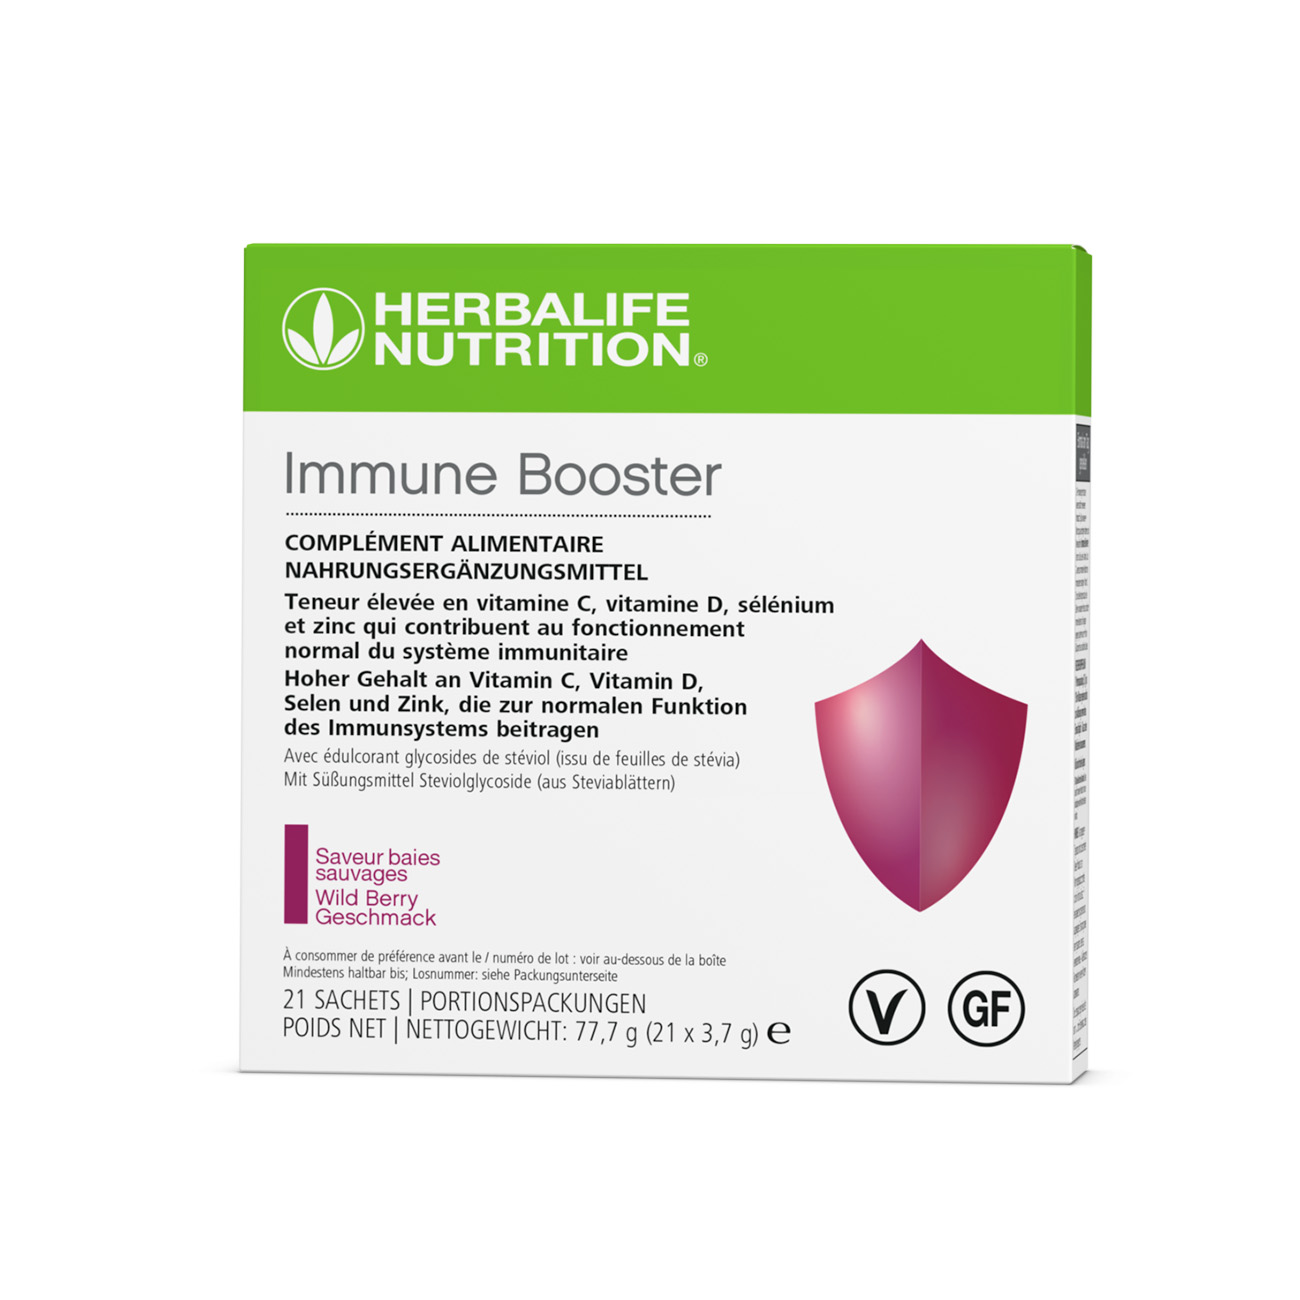 Immune Booster - image produit